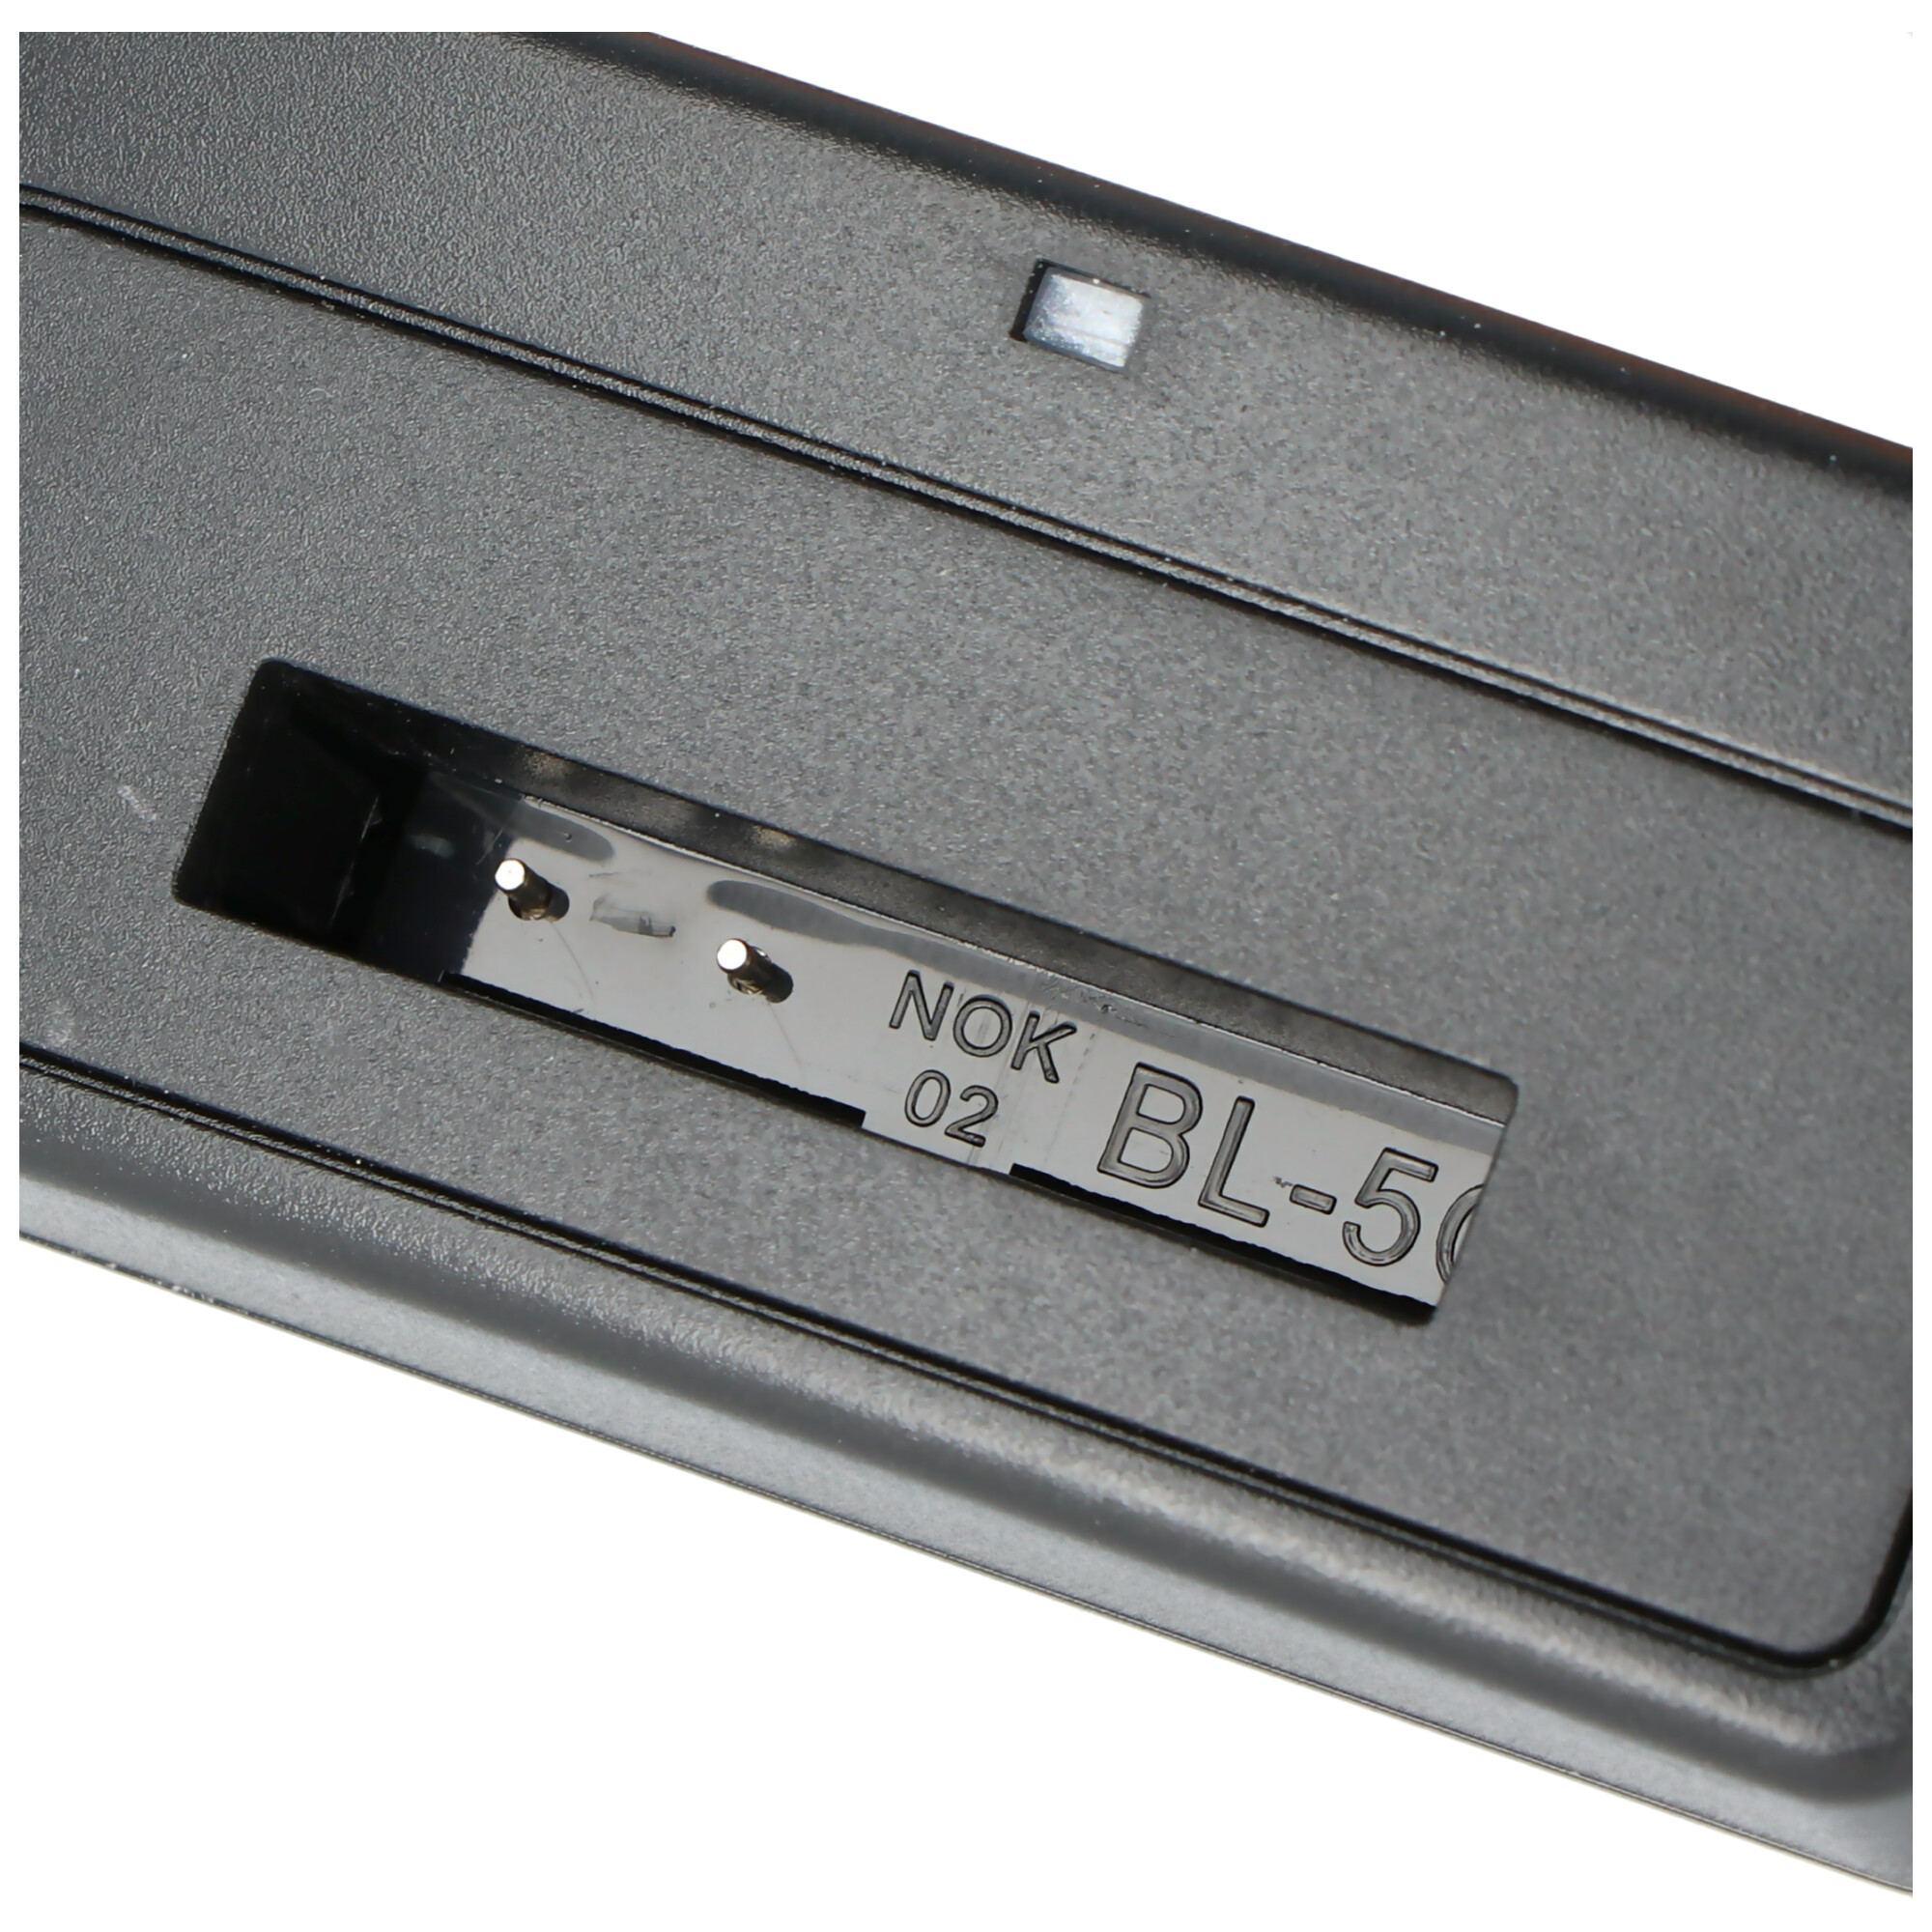 Akkuladegerät für Nokia BL-5C, BL-5B Akku zum externen laden inklusive MicroUSB Kabel